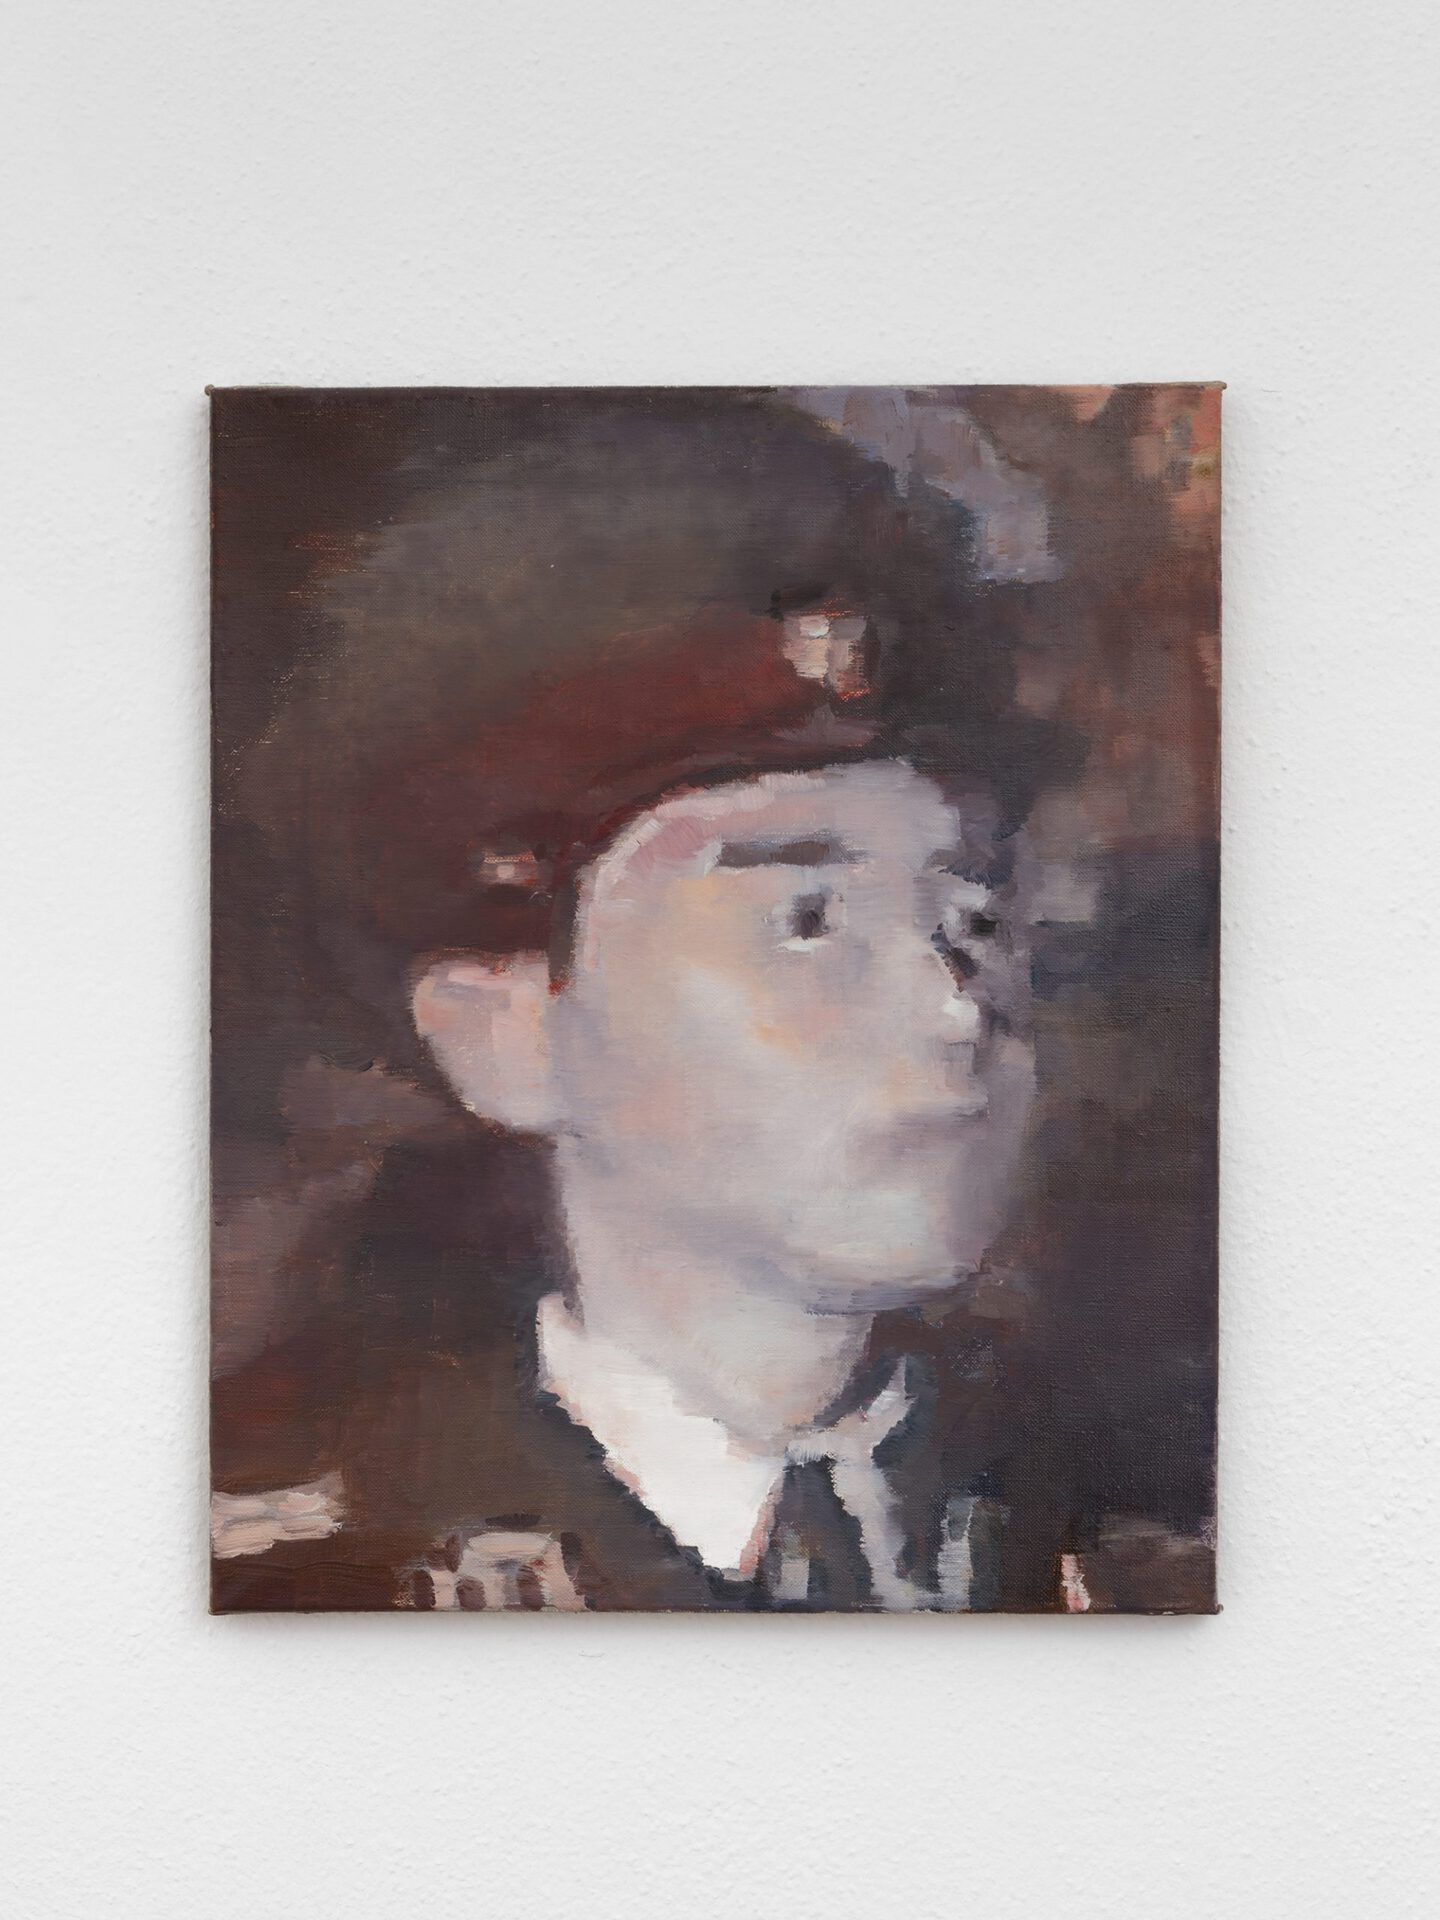 Andrey Anro, The Little Soldier (Солдатик) , 2021 50 x 40 cm x 3 cm, Oil on linen